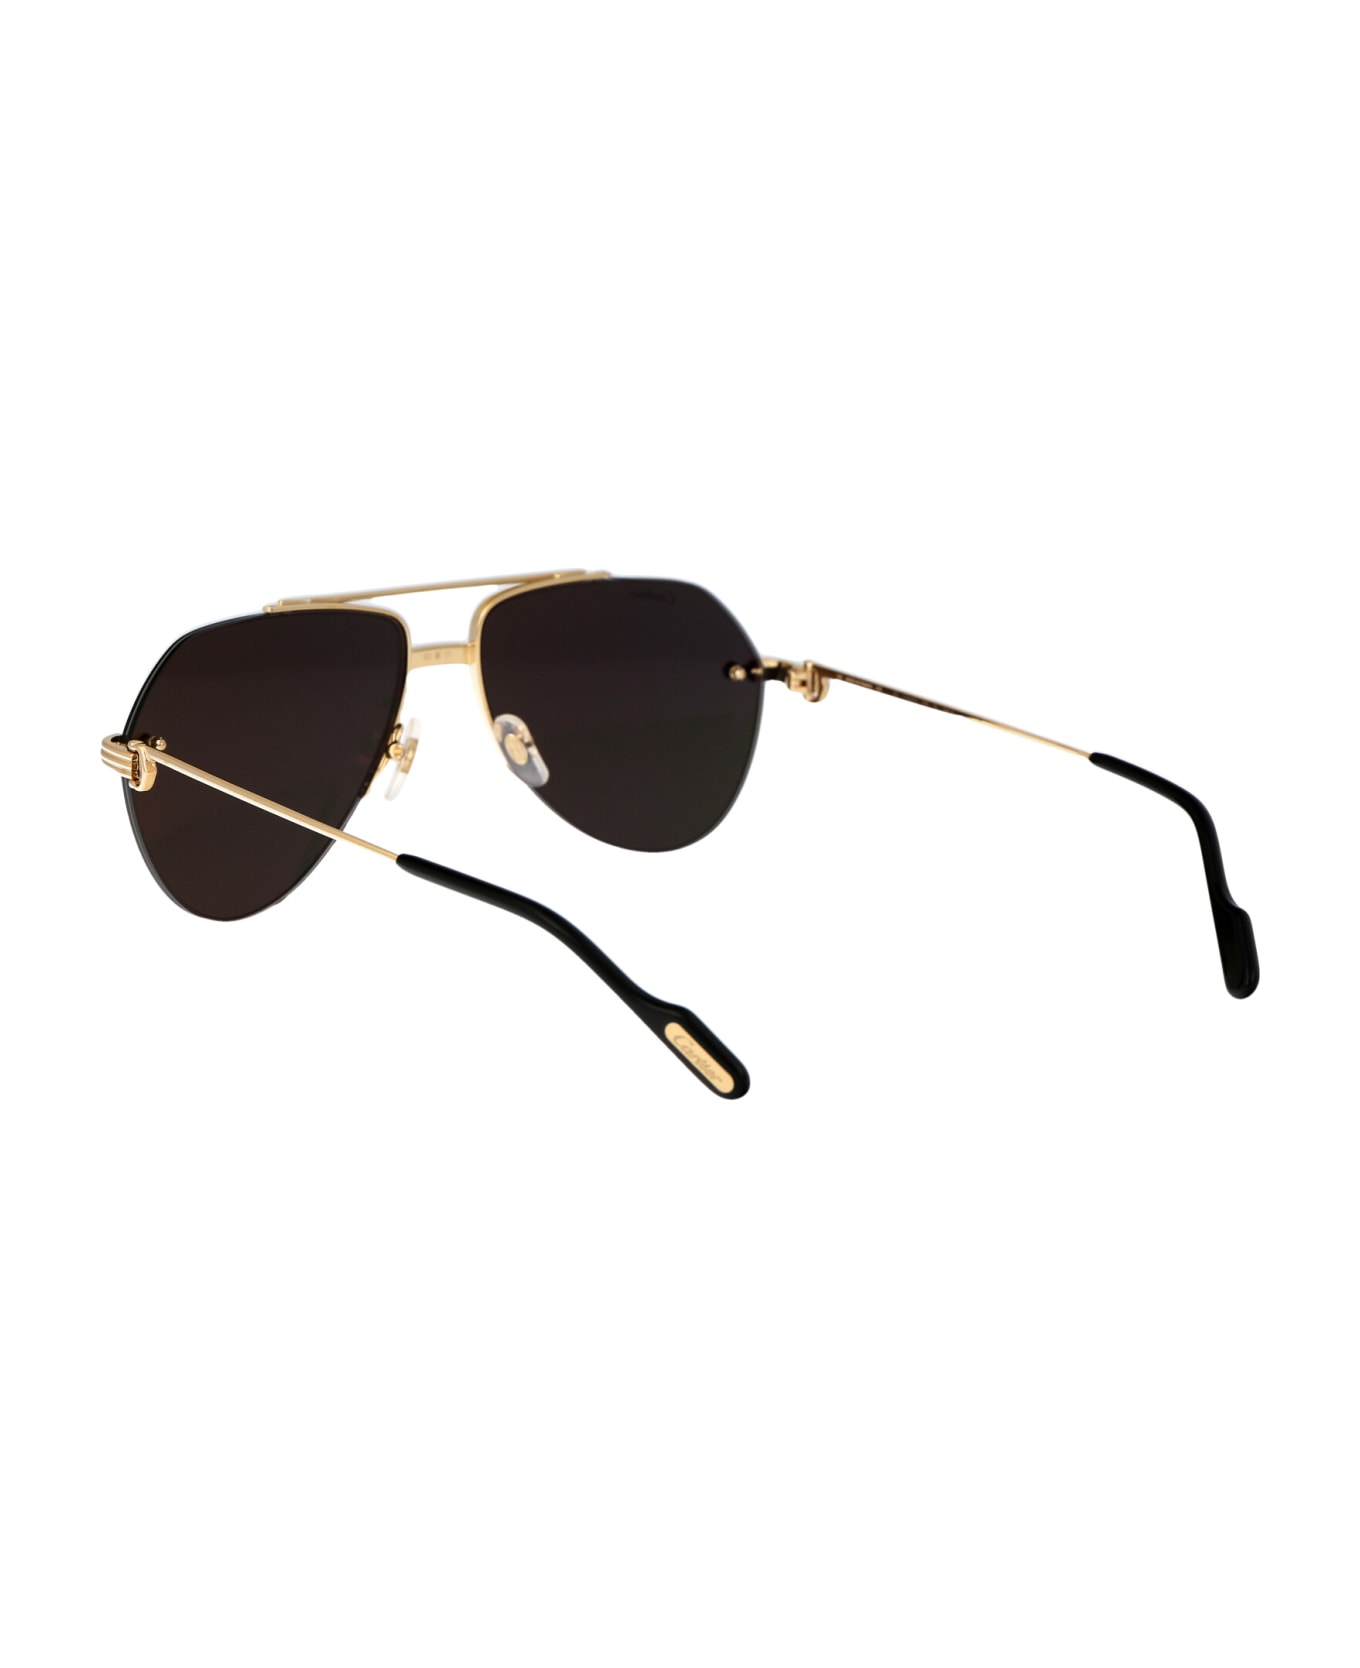 Cartier Eyewear Ct0427s Sunglasses - 005 GOLD GOLD GREY サングラス